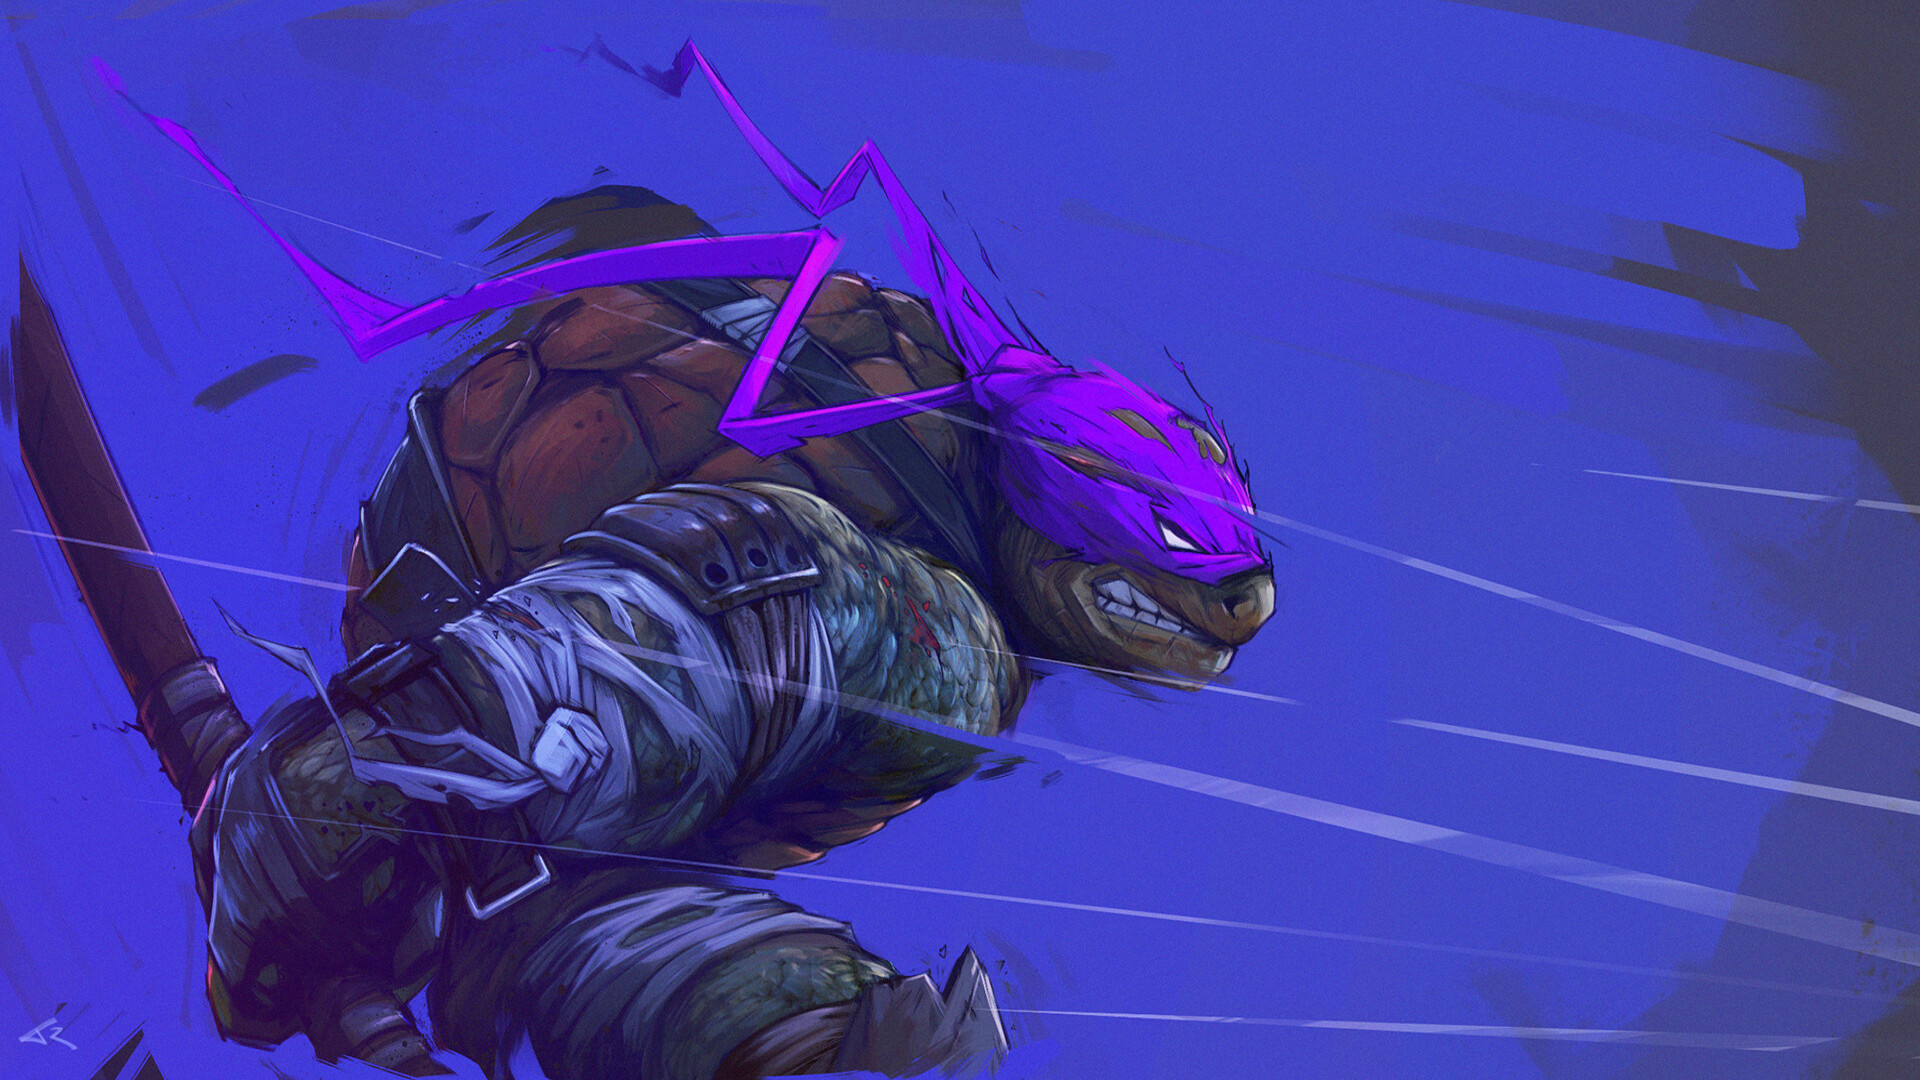 Descarga gratis la imagen Donatello (Tmnt), Historietas, Tortugas Ninja en el escritorio de tu PC